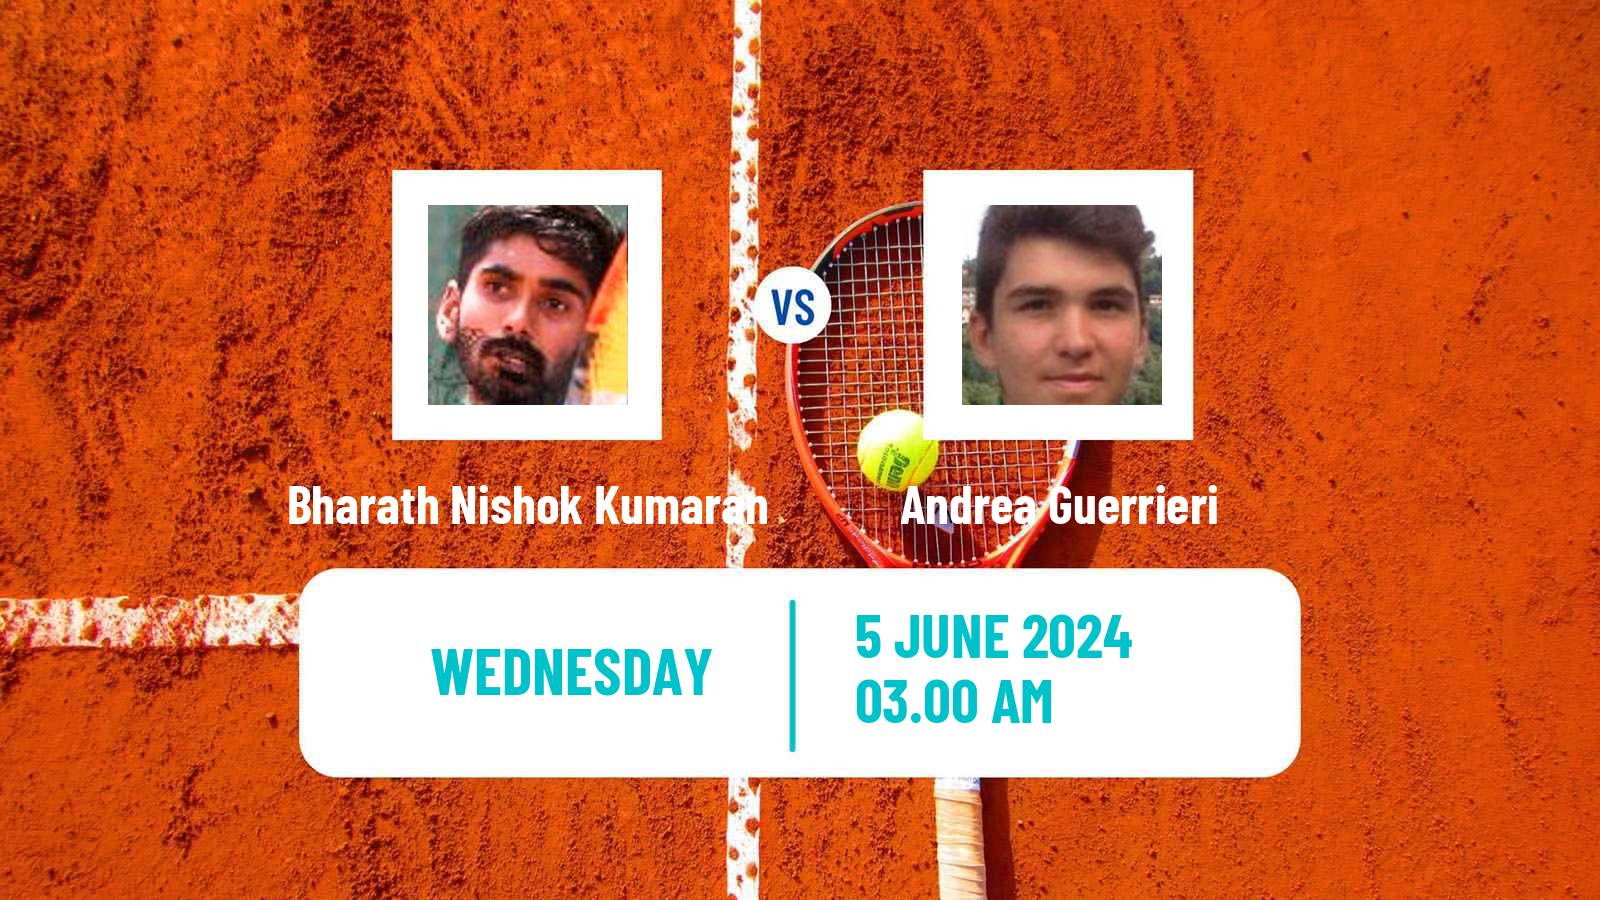 Tennis ITF M25 Cordoba Men Bharath Nishok Kumaran - Andrea Guerrieri